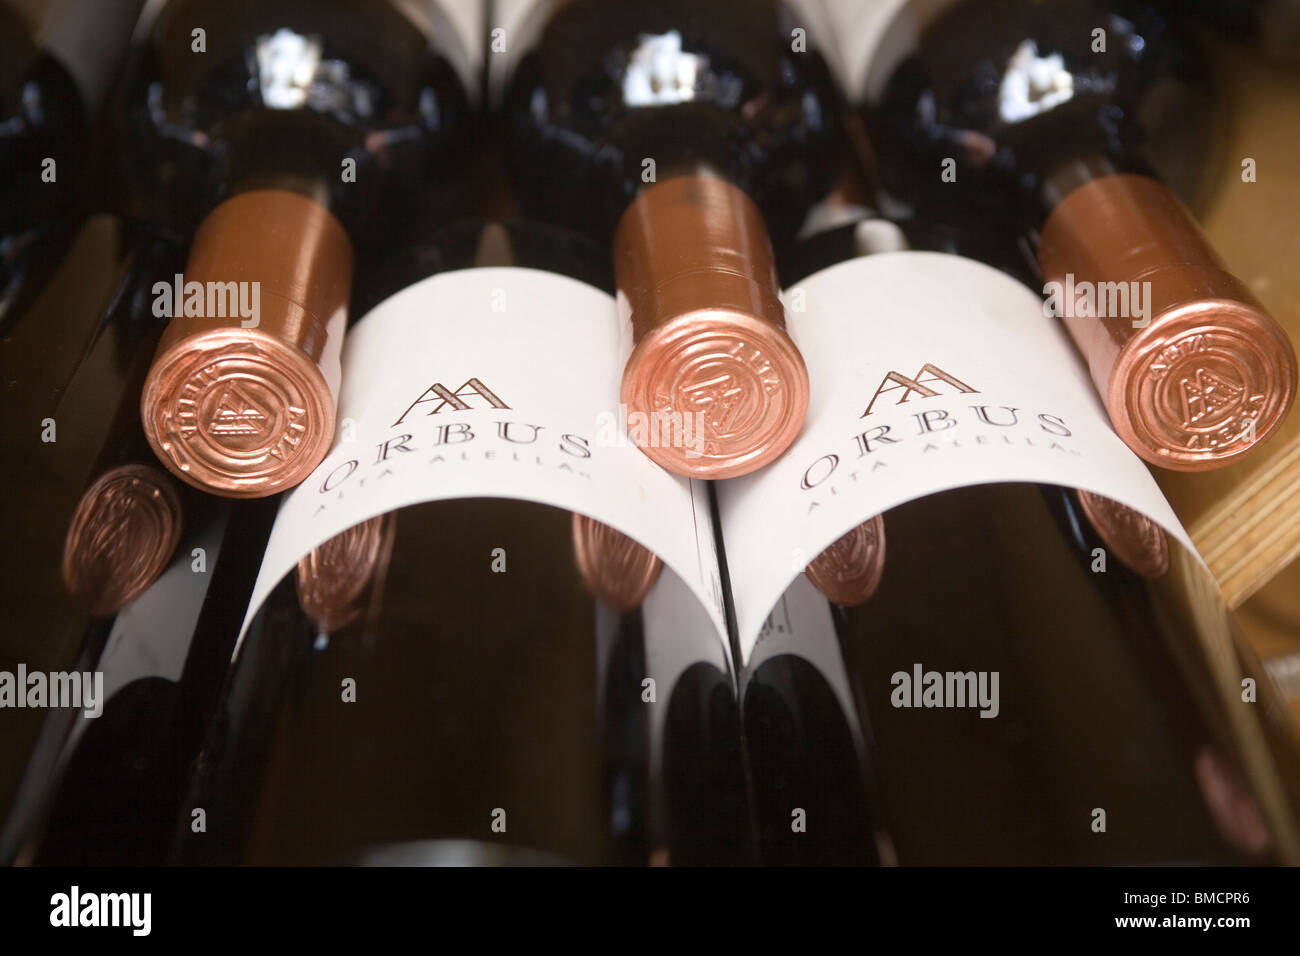 Spanish Wine Bottles in Cellar Stock Photo